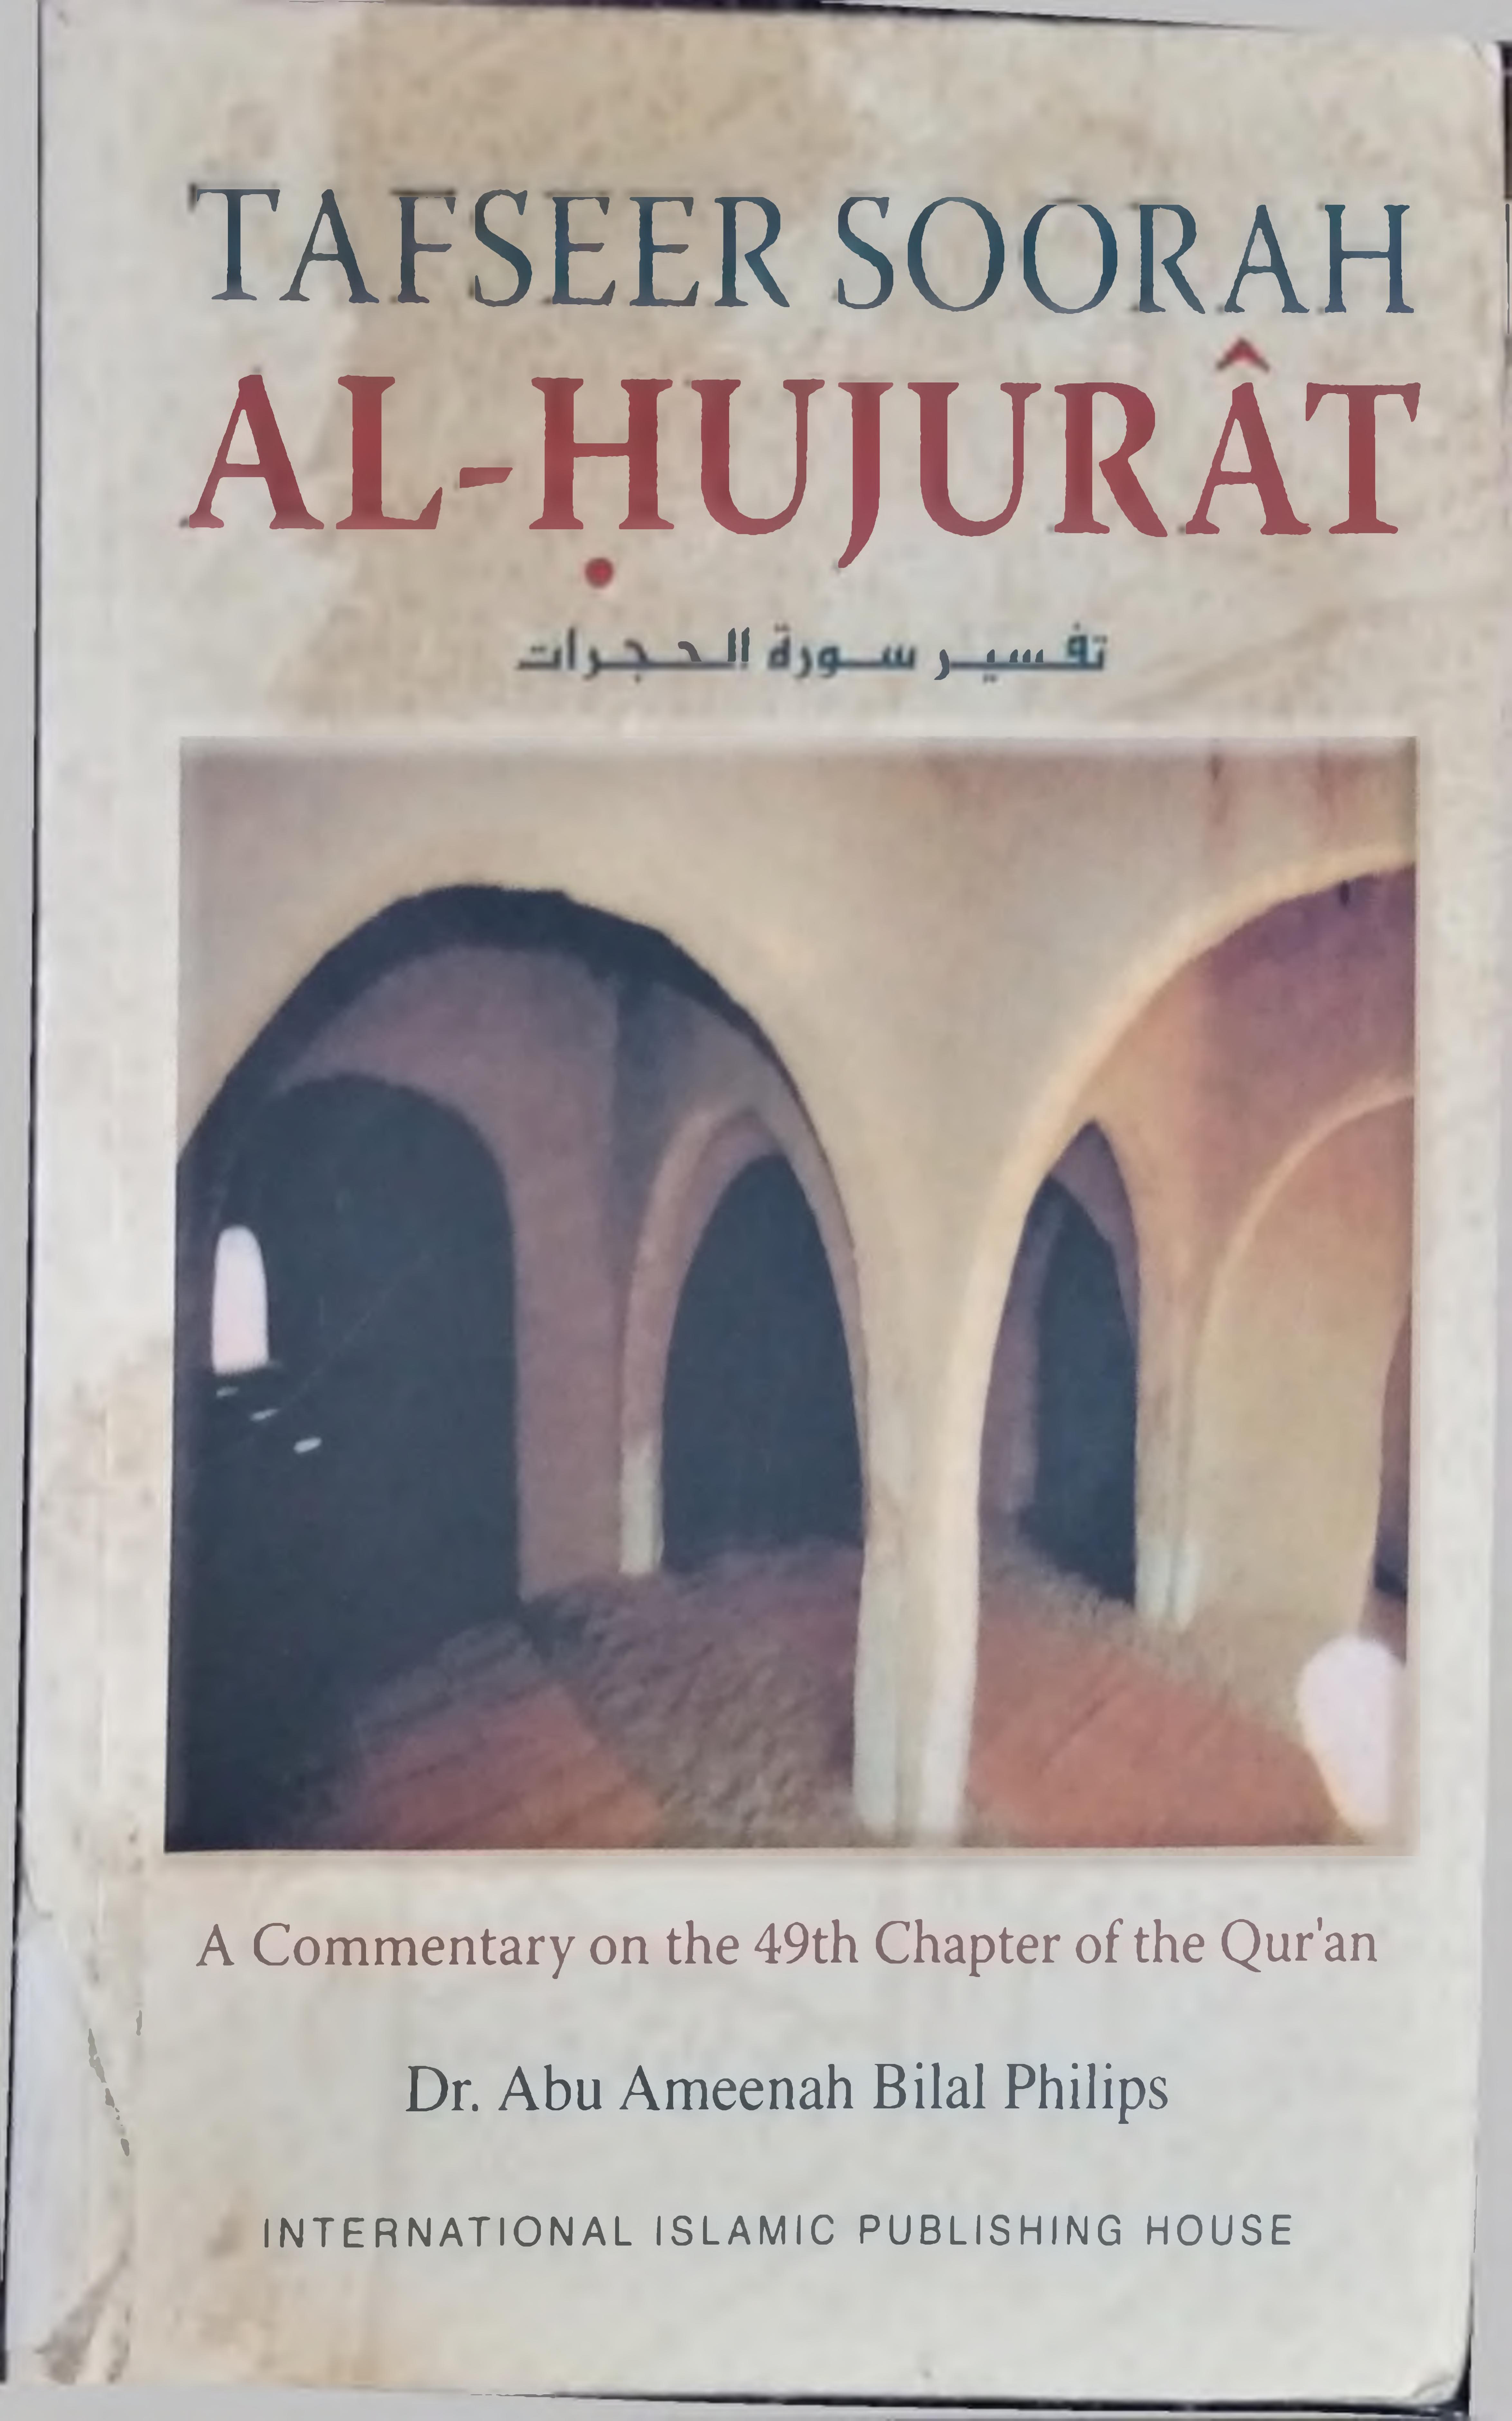 islamic studies book 2 bilal philips pdf free download